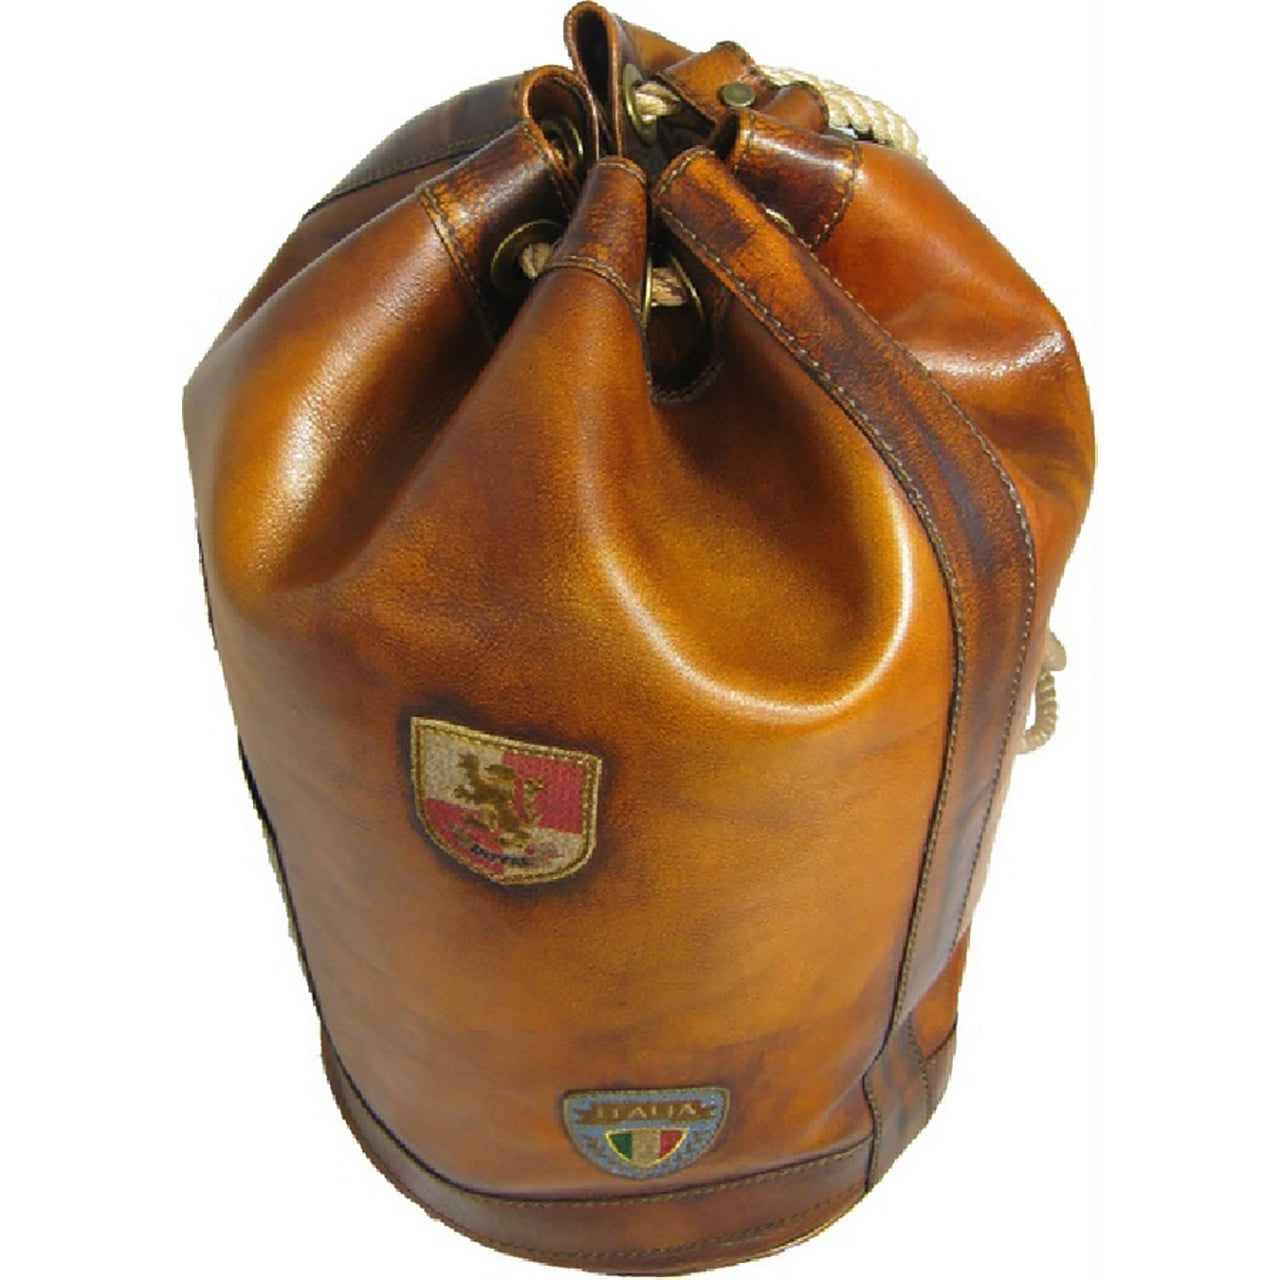 Pratesi Travel Bag Patagonia in genuine Italian leather - Vegetable Tanned Italian Leather Coffee